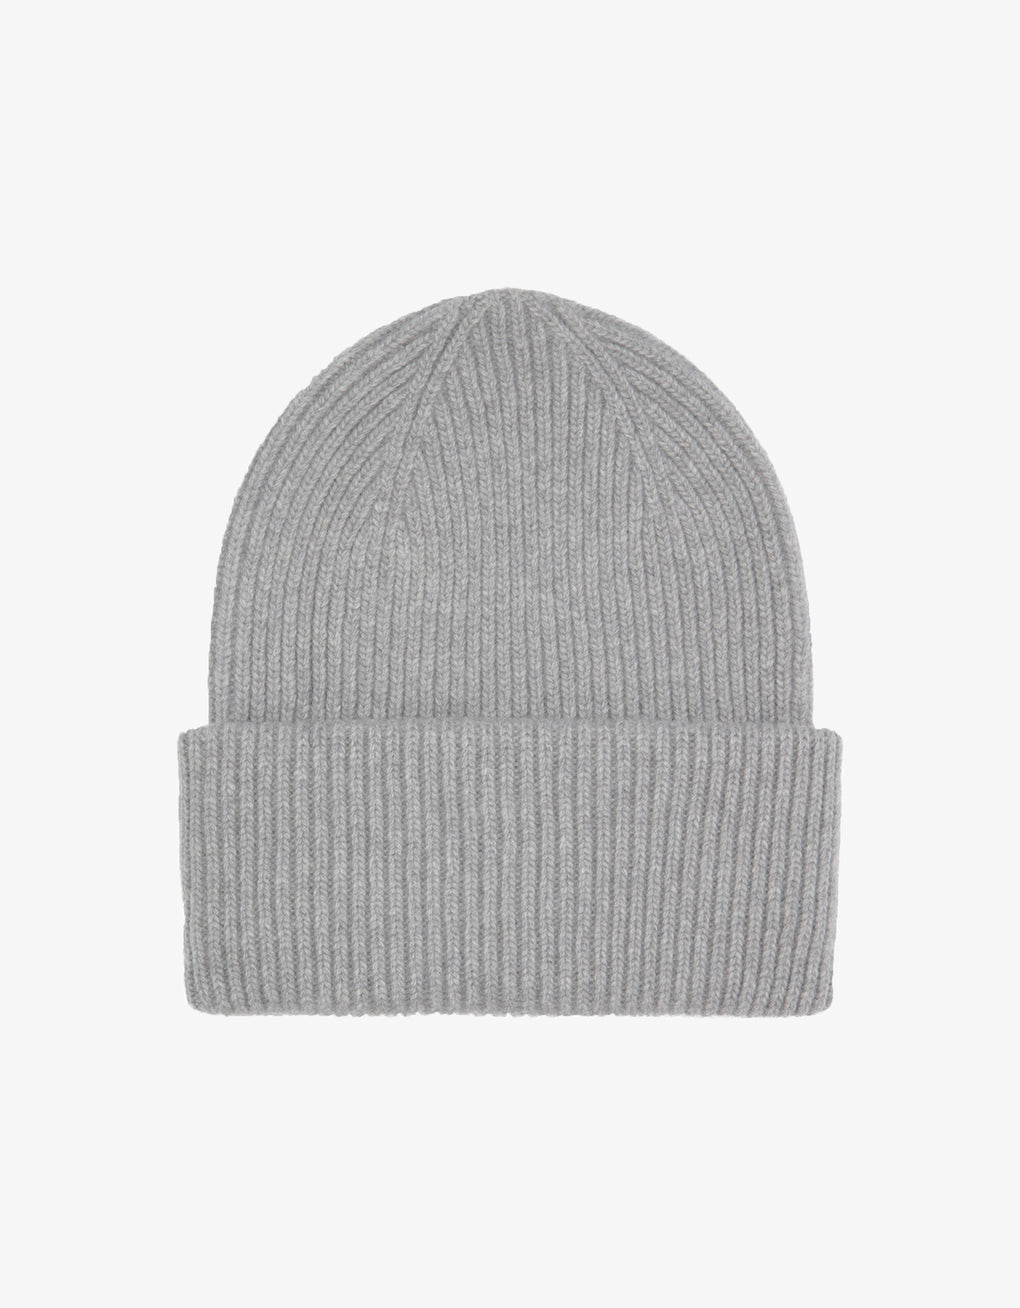 Merino wool hat - heather grey